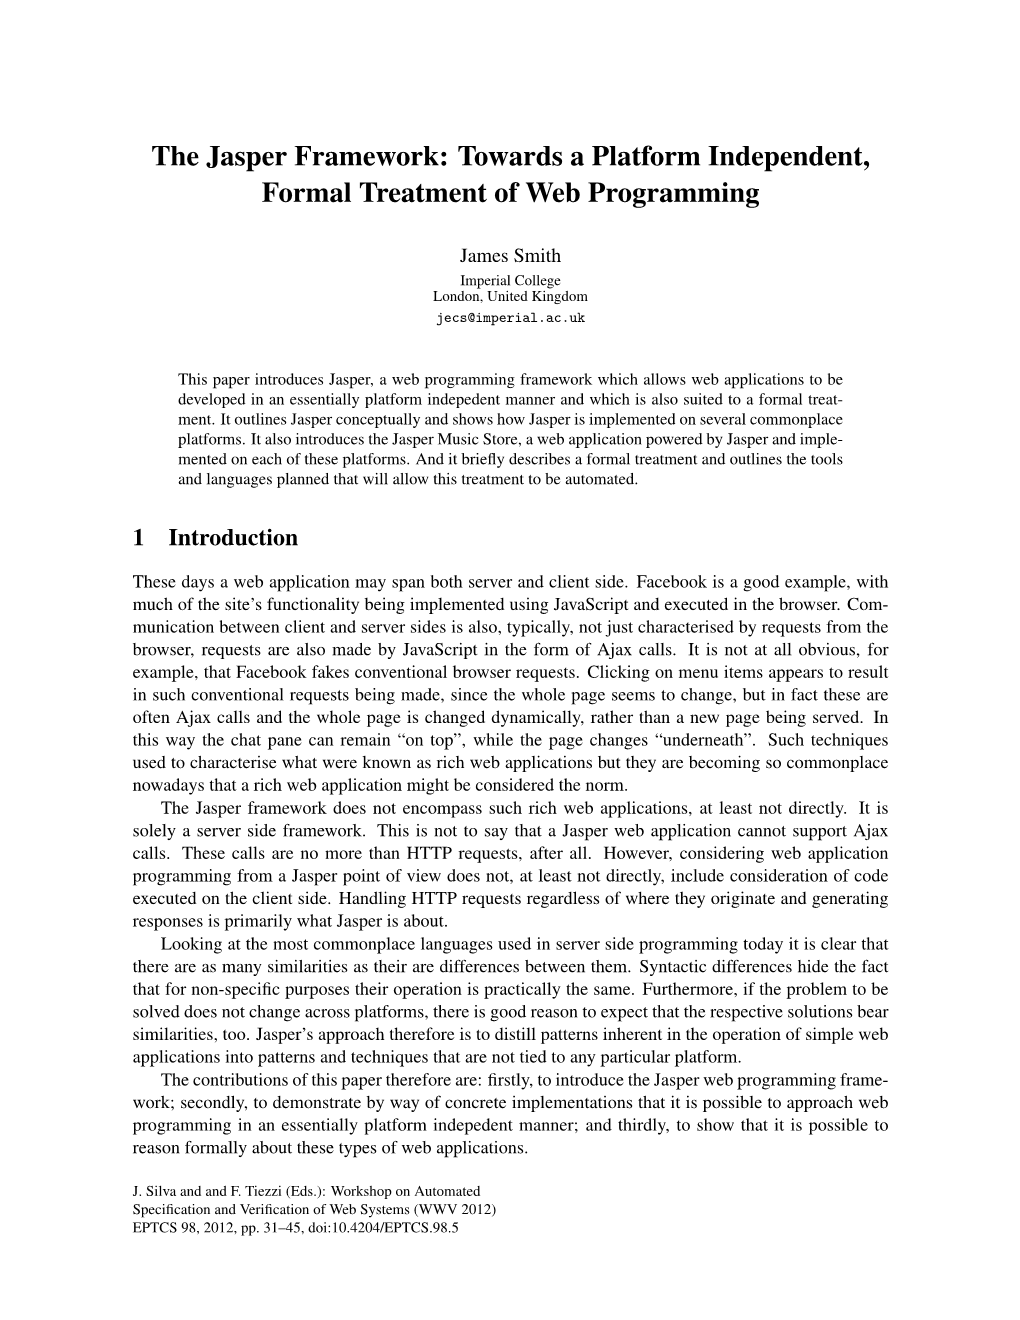 The Jasper Framework: Towards a Platform Independent, Formal Treatment of Web Programming